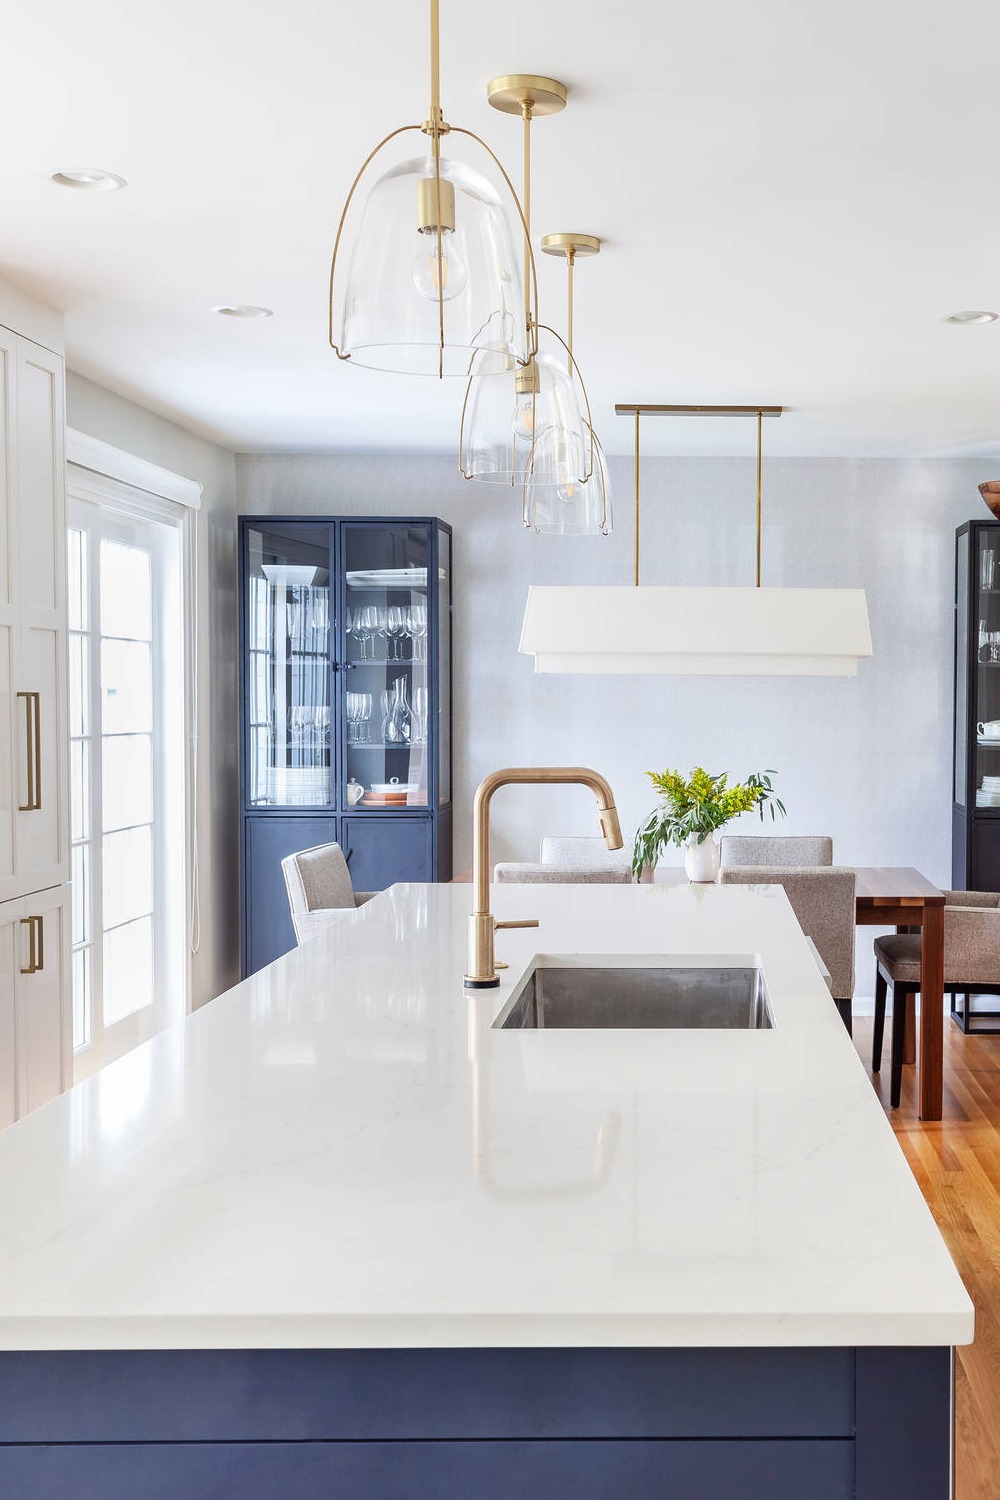 Pendant Lighting Blue Cabinets White Quartz Countertops Wood Floor Gray Walls